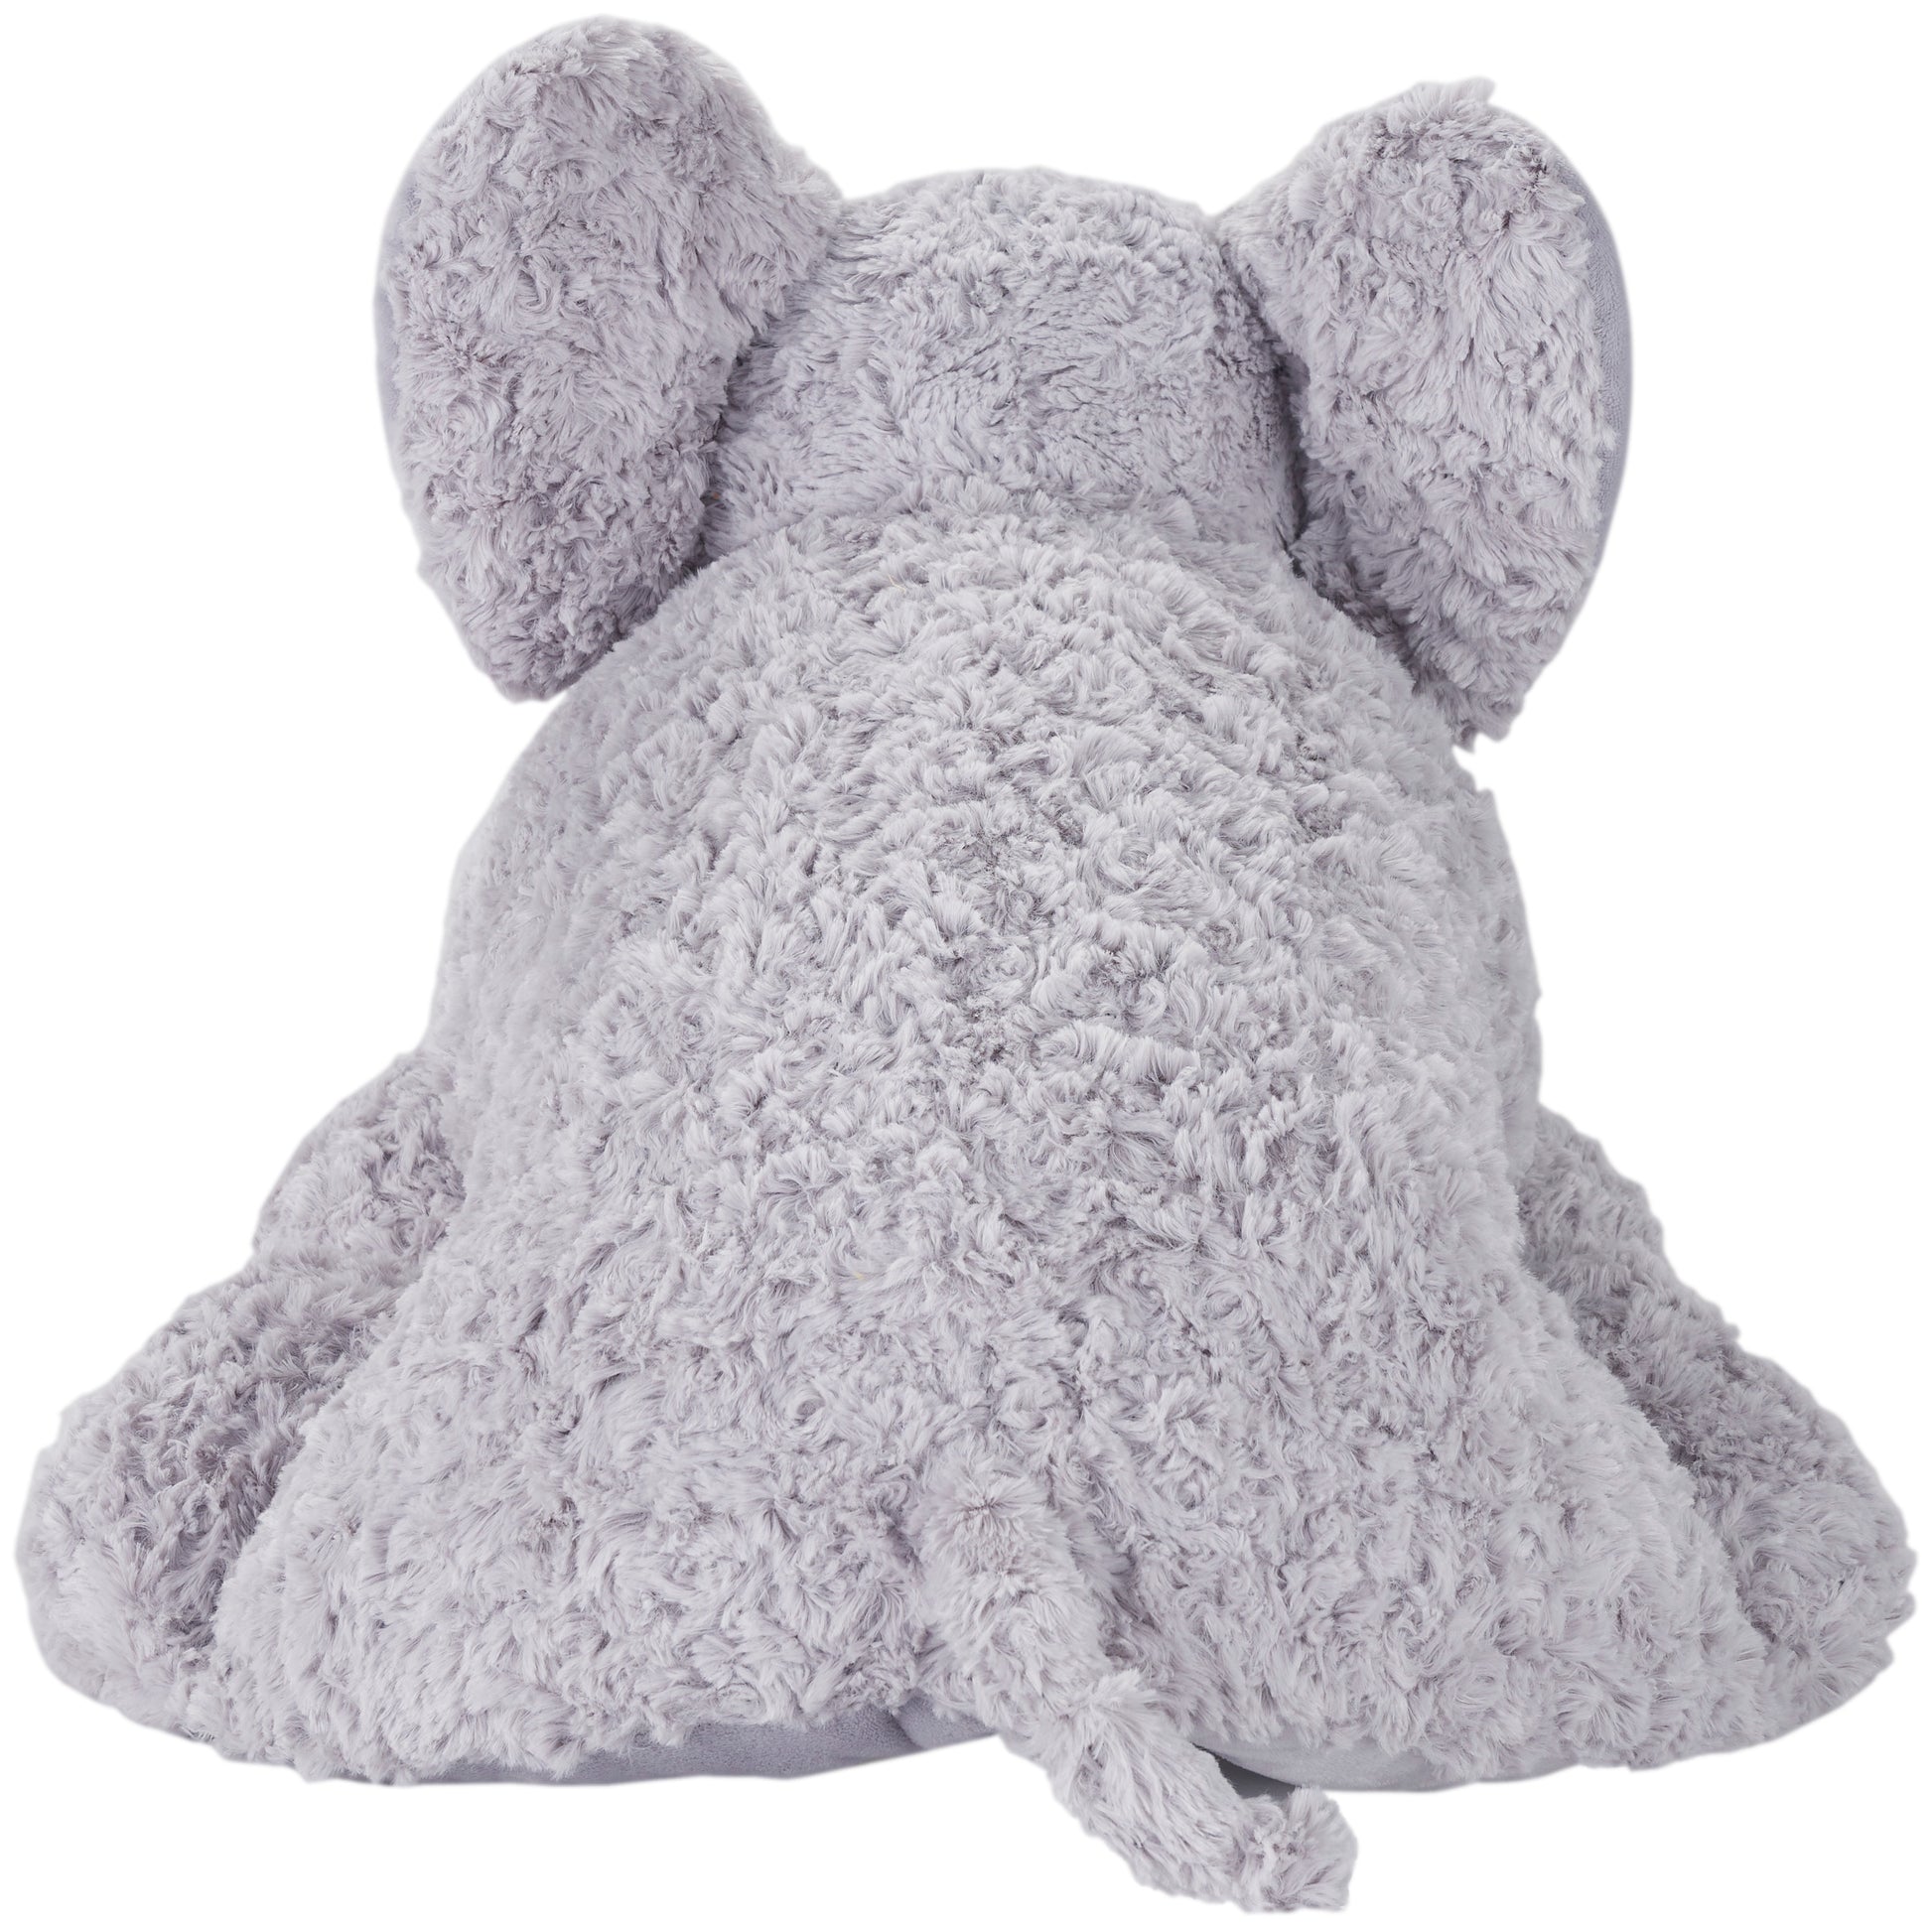 Mina Victory Plush Toy Elephant Grey Animal Accent Pieces Rug